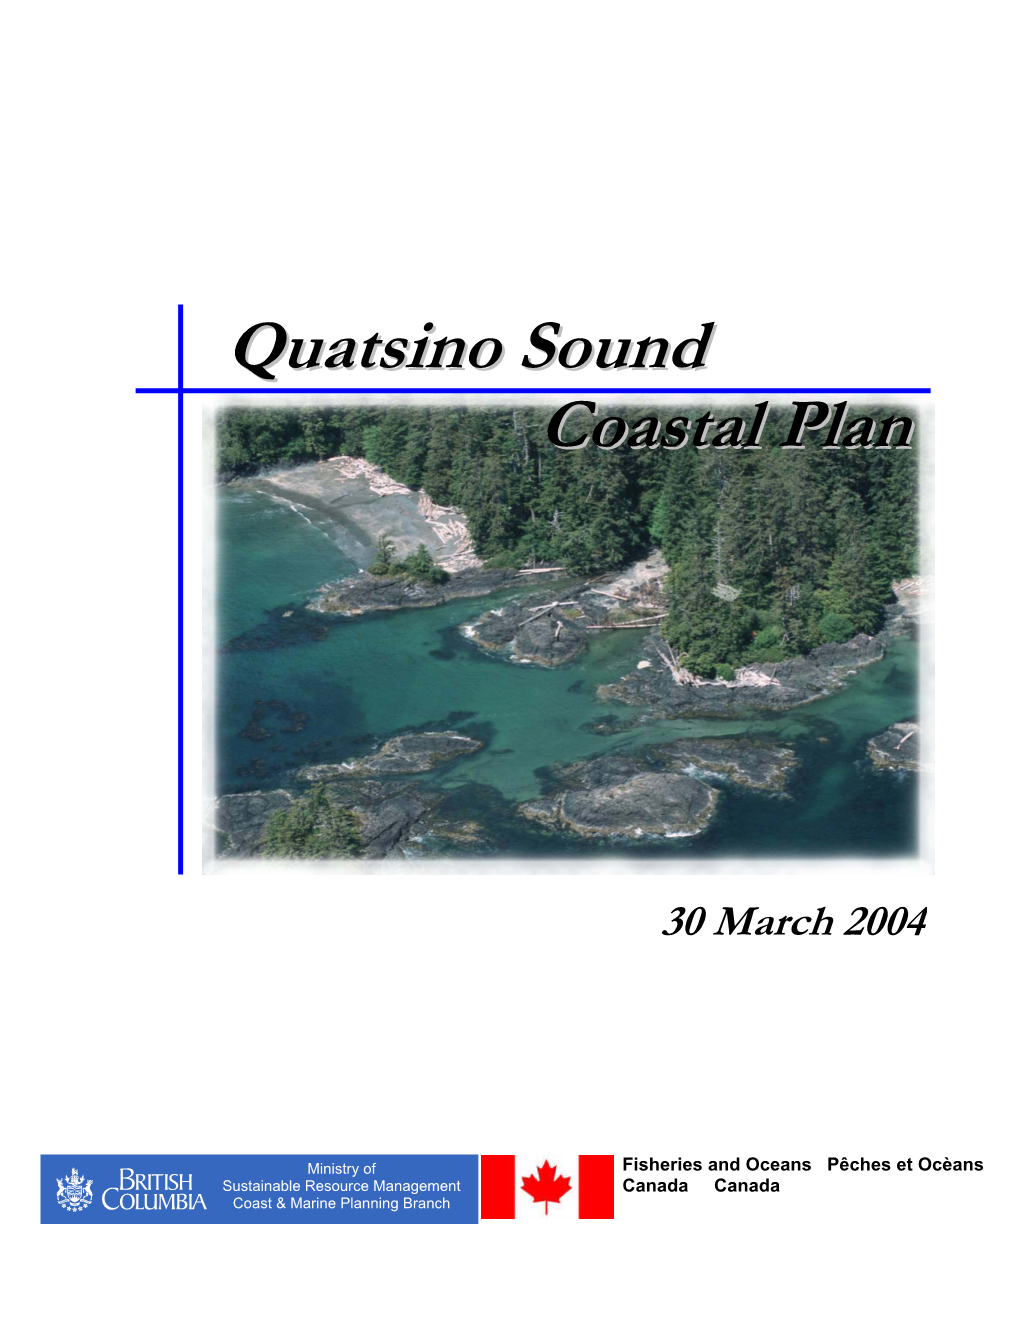 Quatsino Sound Coastal Plan